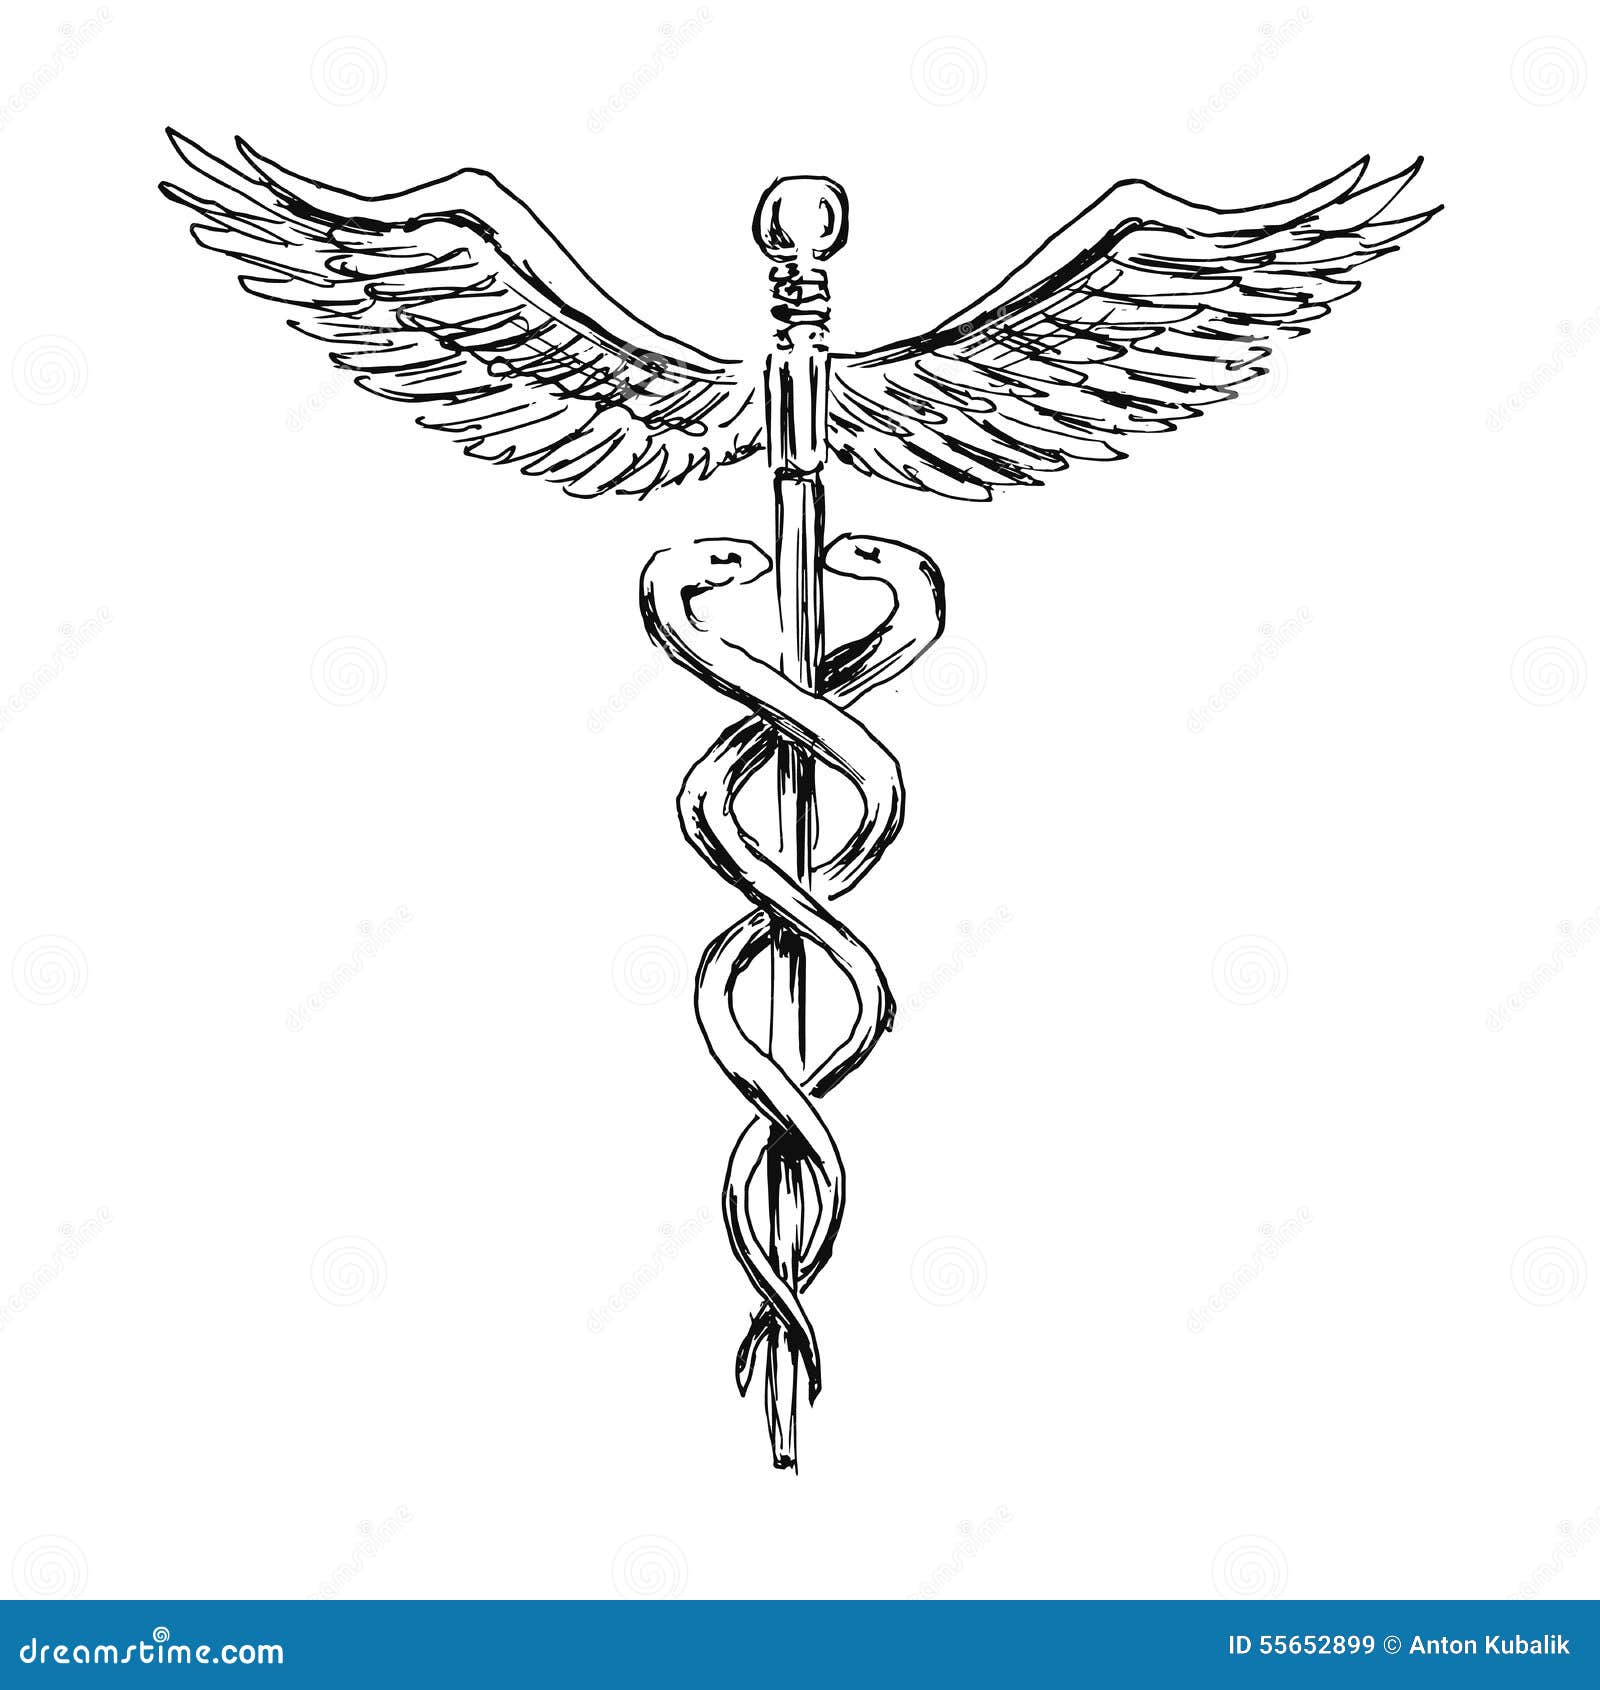 Caduceus Medical Symbol Emblem Decoration Background Vector, Rat Drawing,  Emblem, Decoration PNG and Vector with Transparent Background for Free  Download